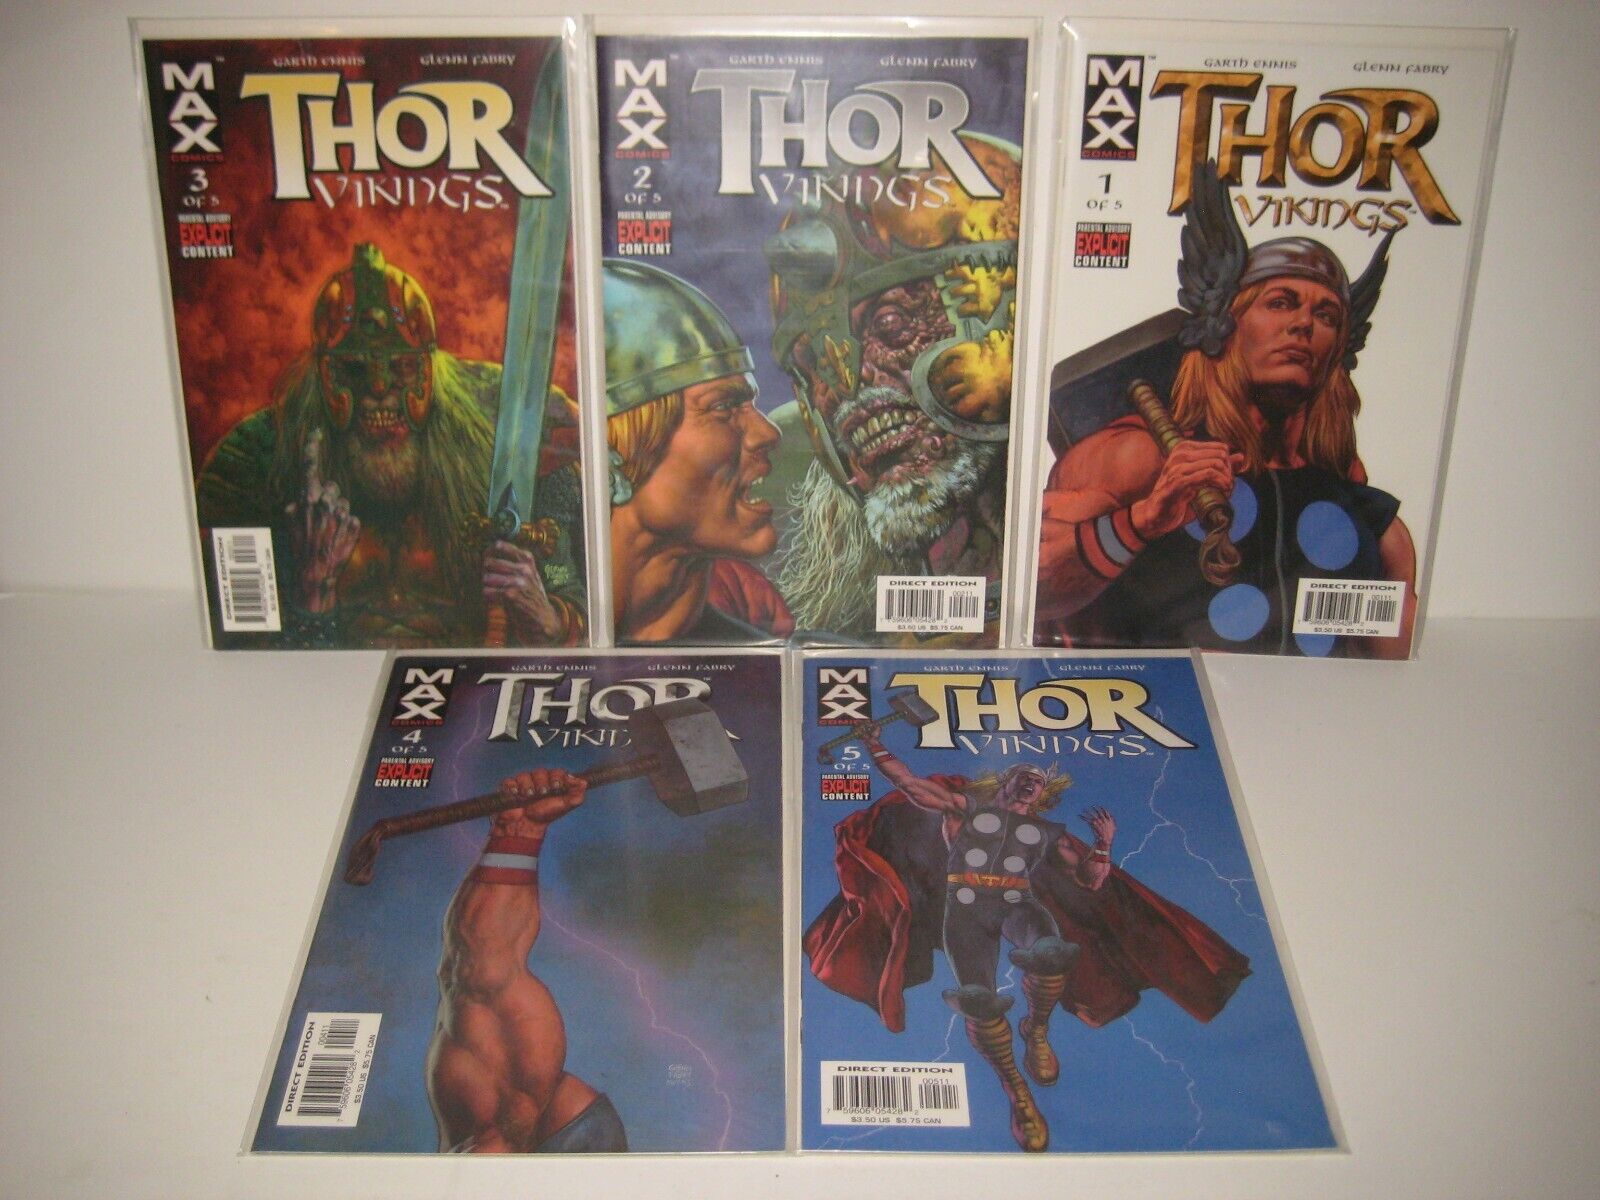 Thor: Vikings #1-5, Complete Limited Series 2003 Marvel, VF/NM